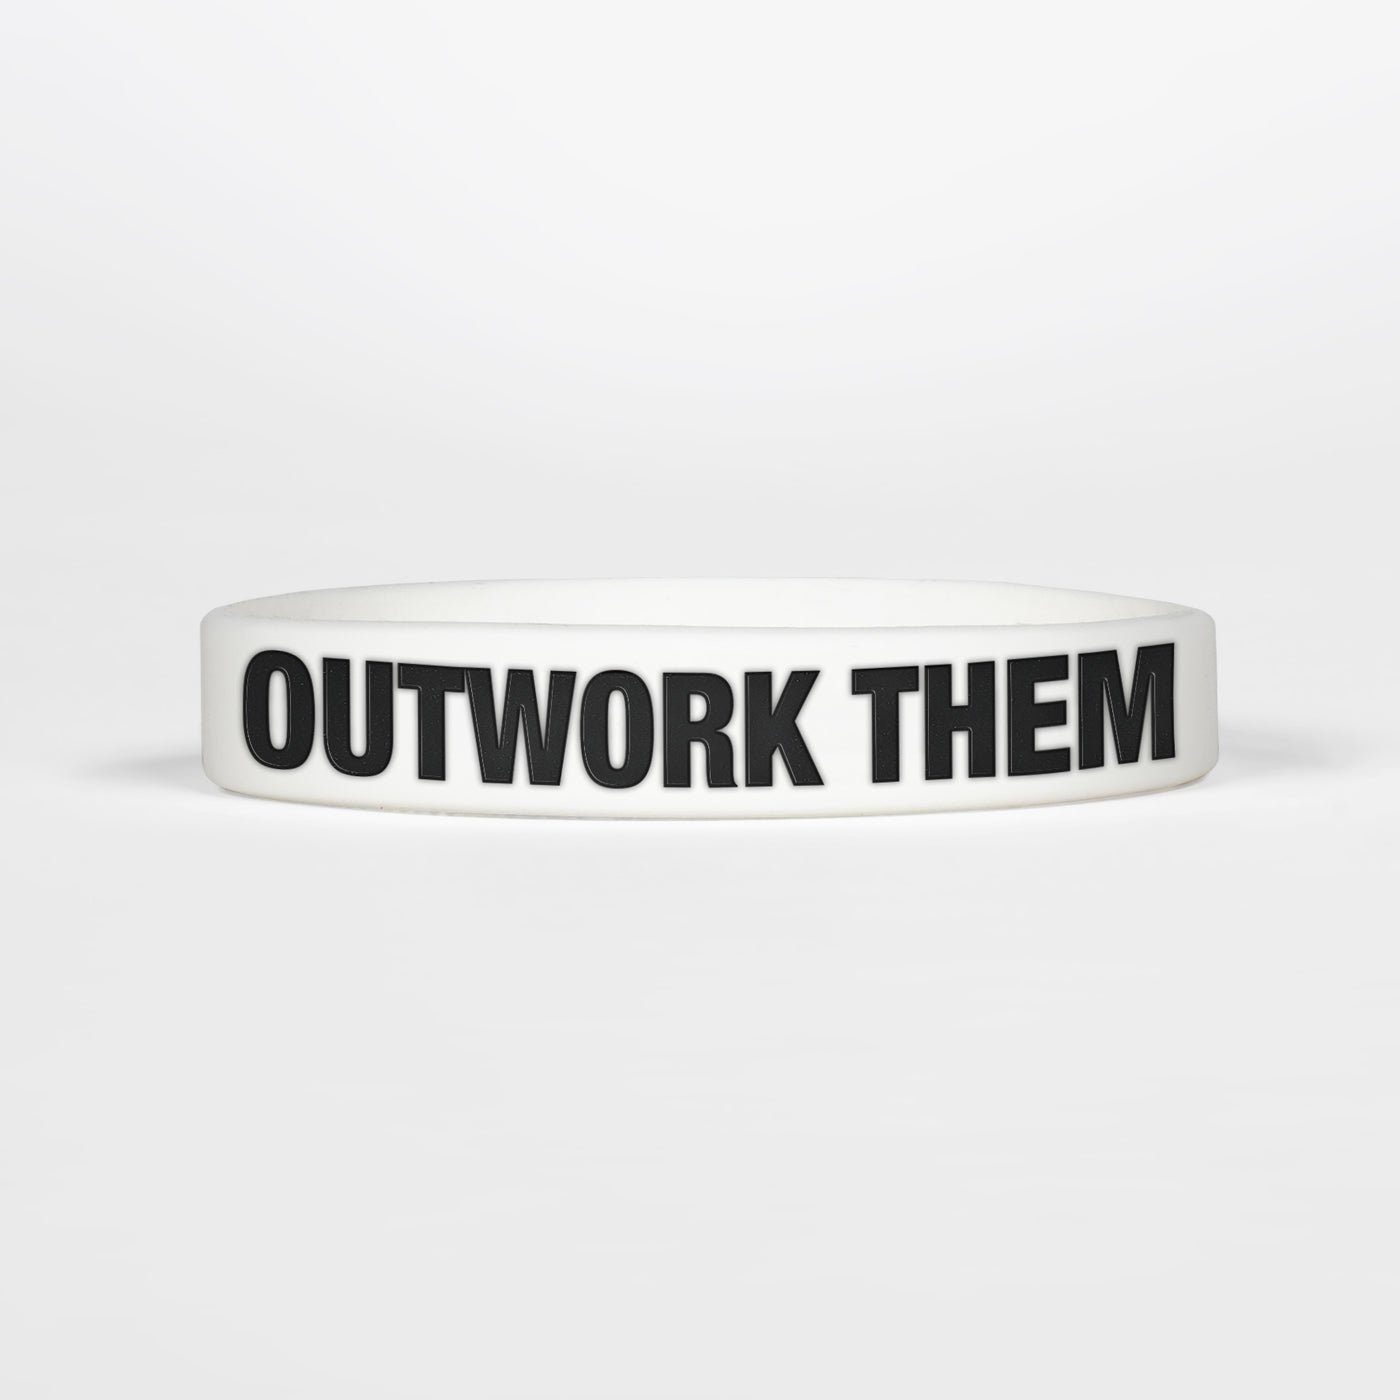 Outwork Them Motivational Wristband